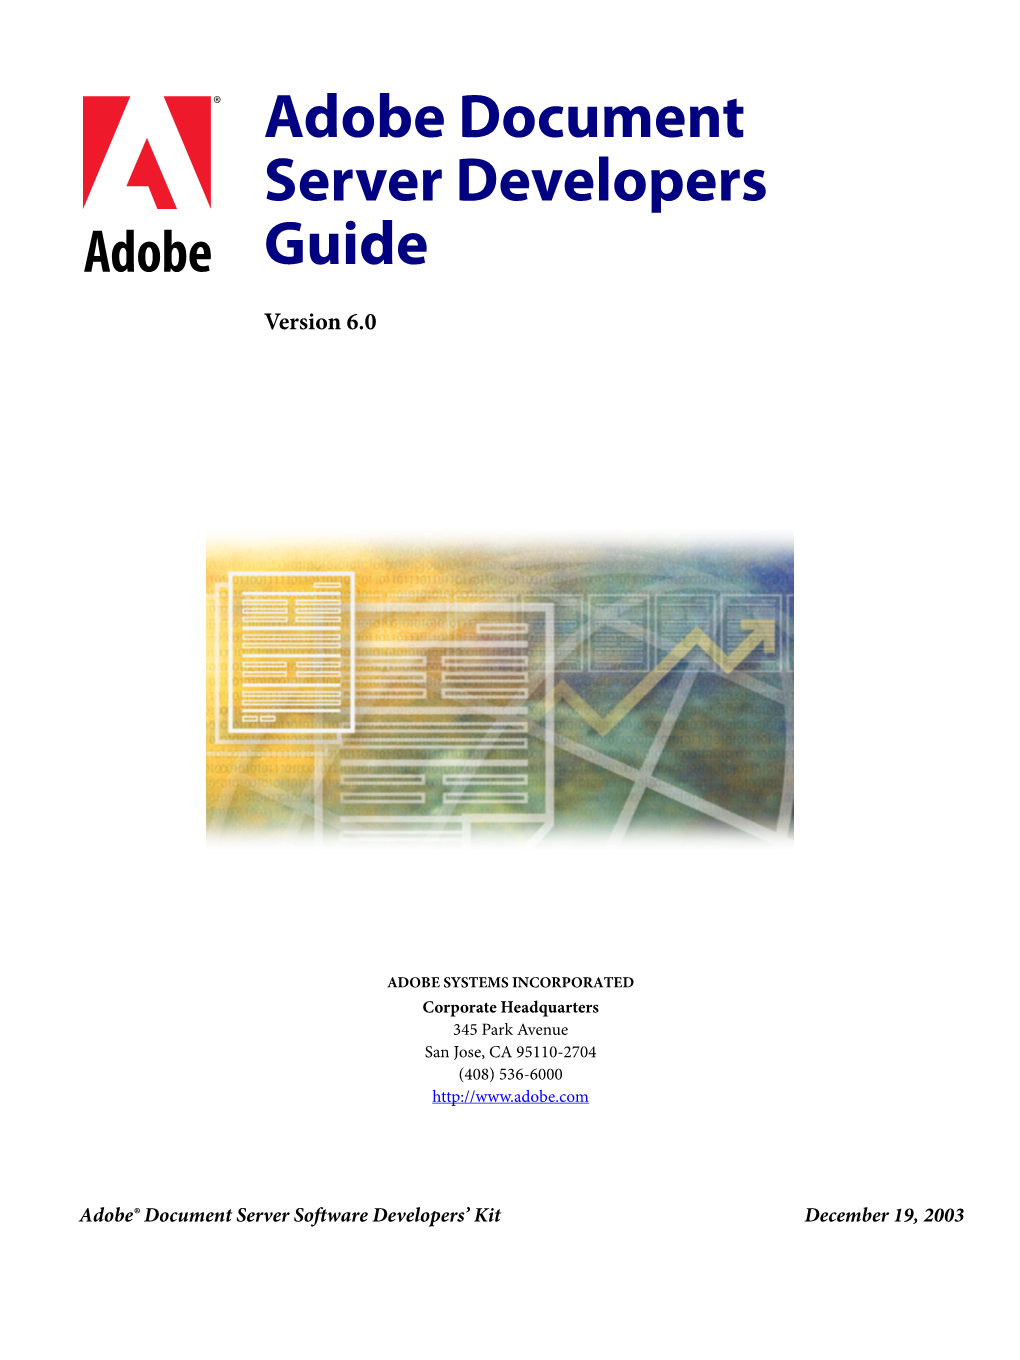 Adobe Server Developers Guide